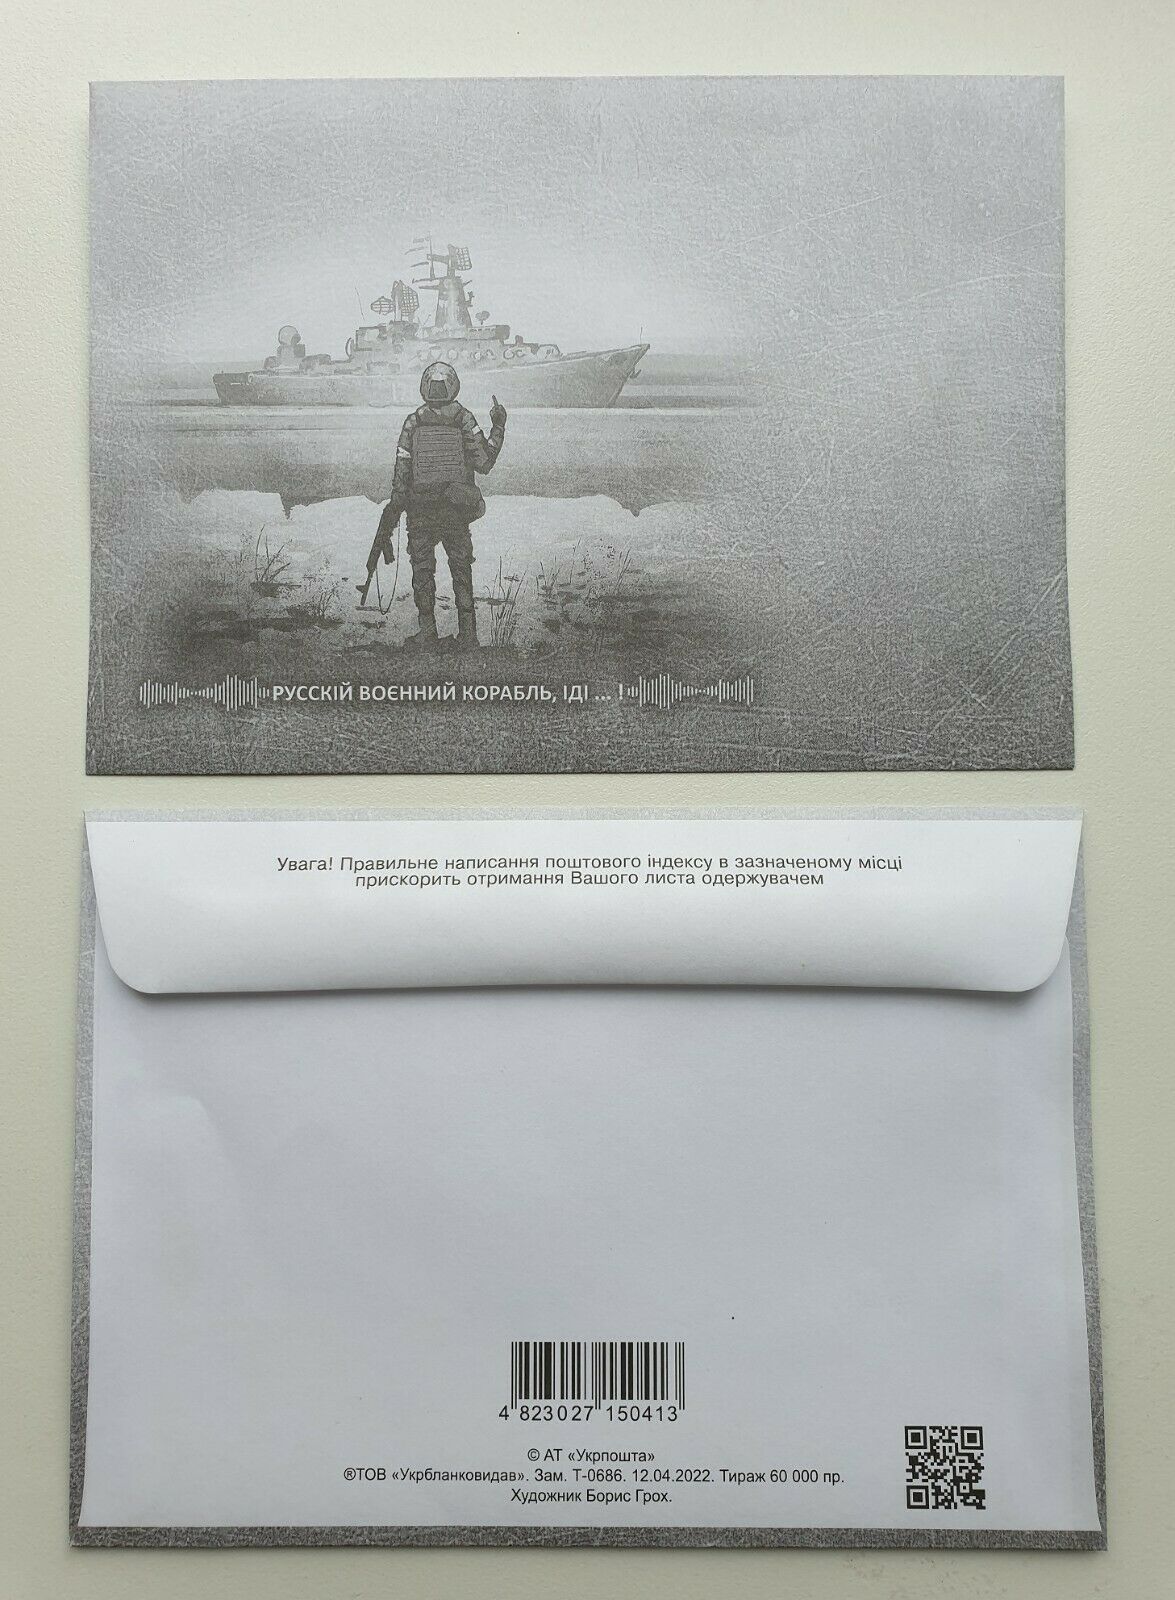 "Russian warship, go ...!", Envelope, 60000 Circulation